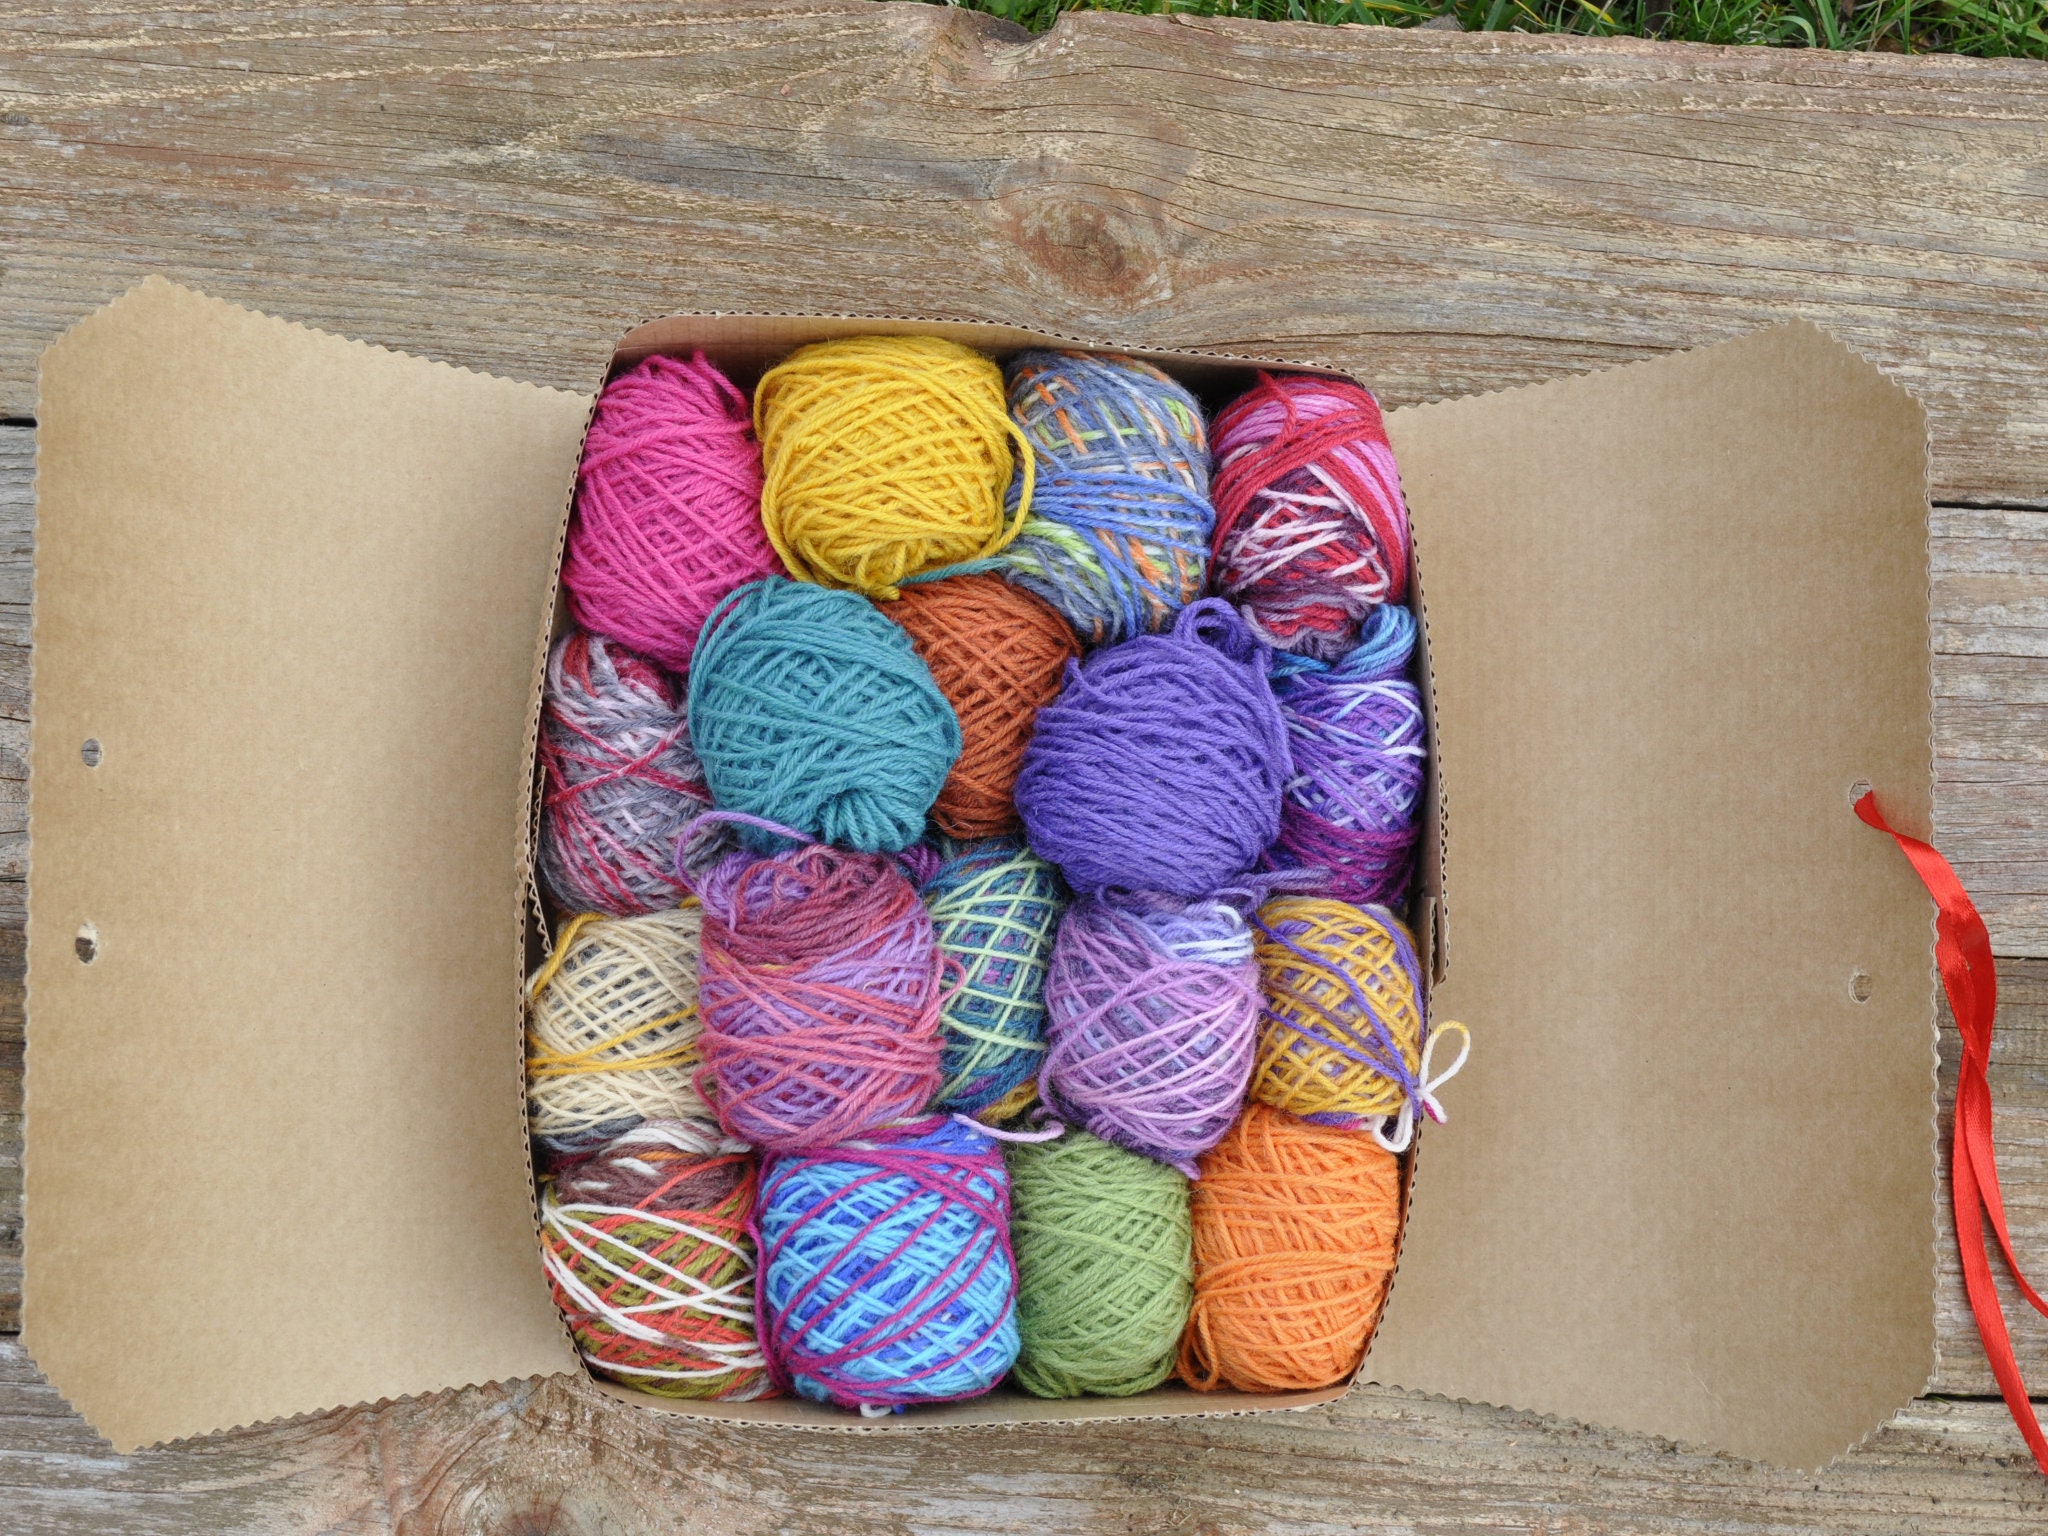 Light up Crochet Hook Set Includes 11 Pieces, Rechargeable Crochet Hooks,  Gift for Crocheter, Guchet Crochet Yarn, Light Crochet Hooks 